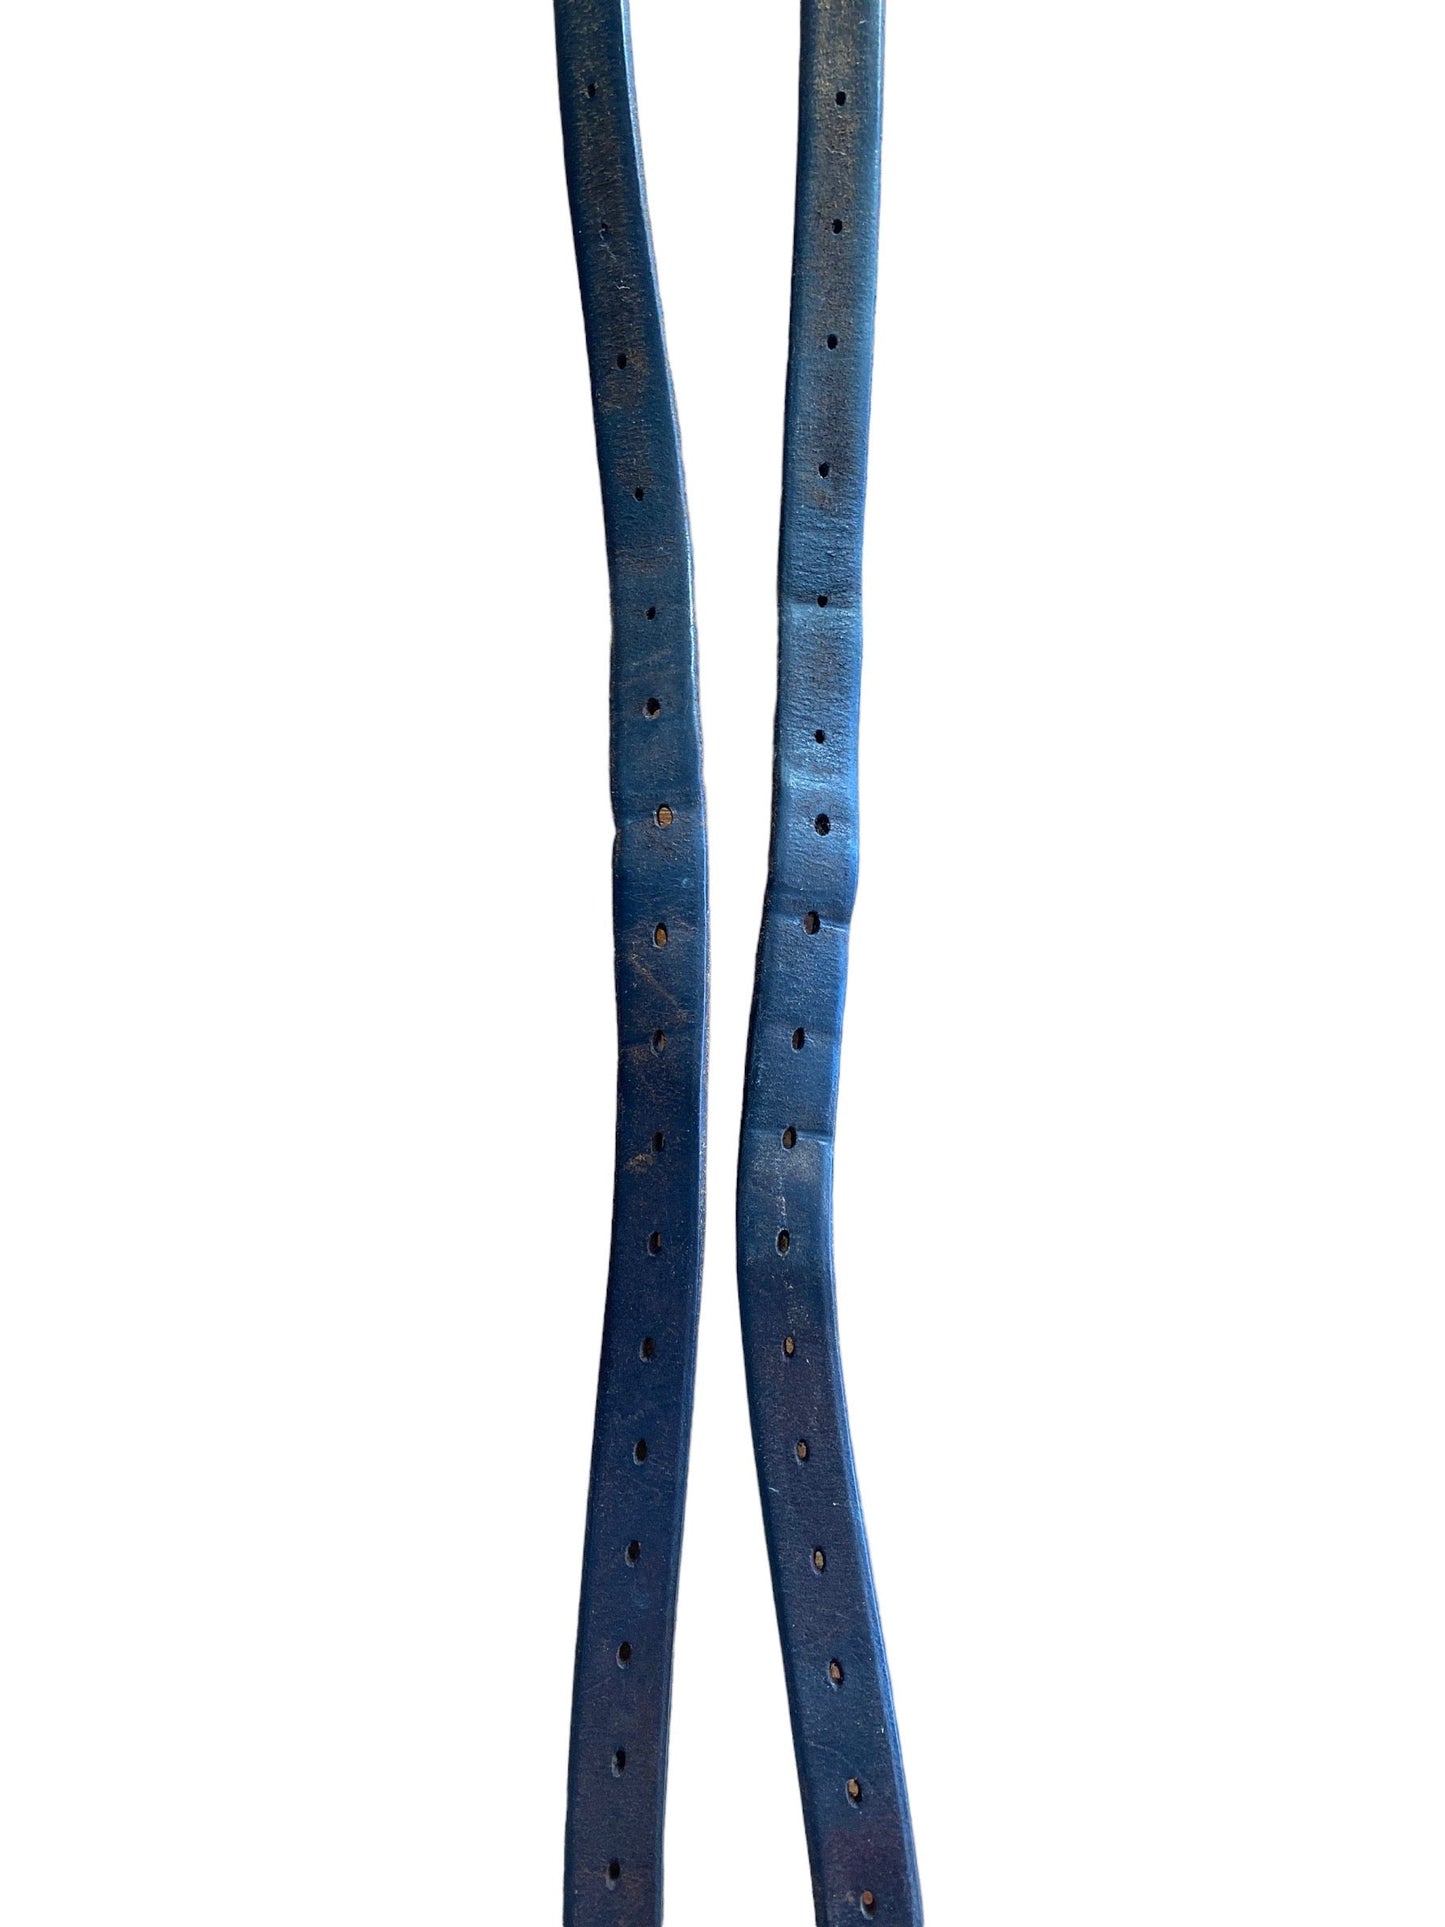 Stirrup Leathers 60"/157.5cm Brown (234204)